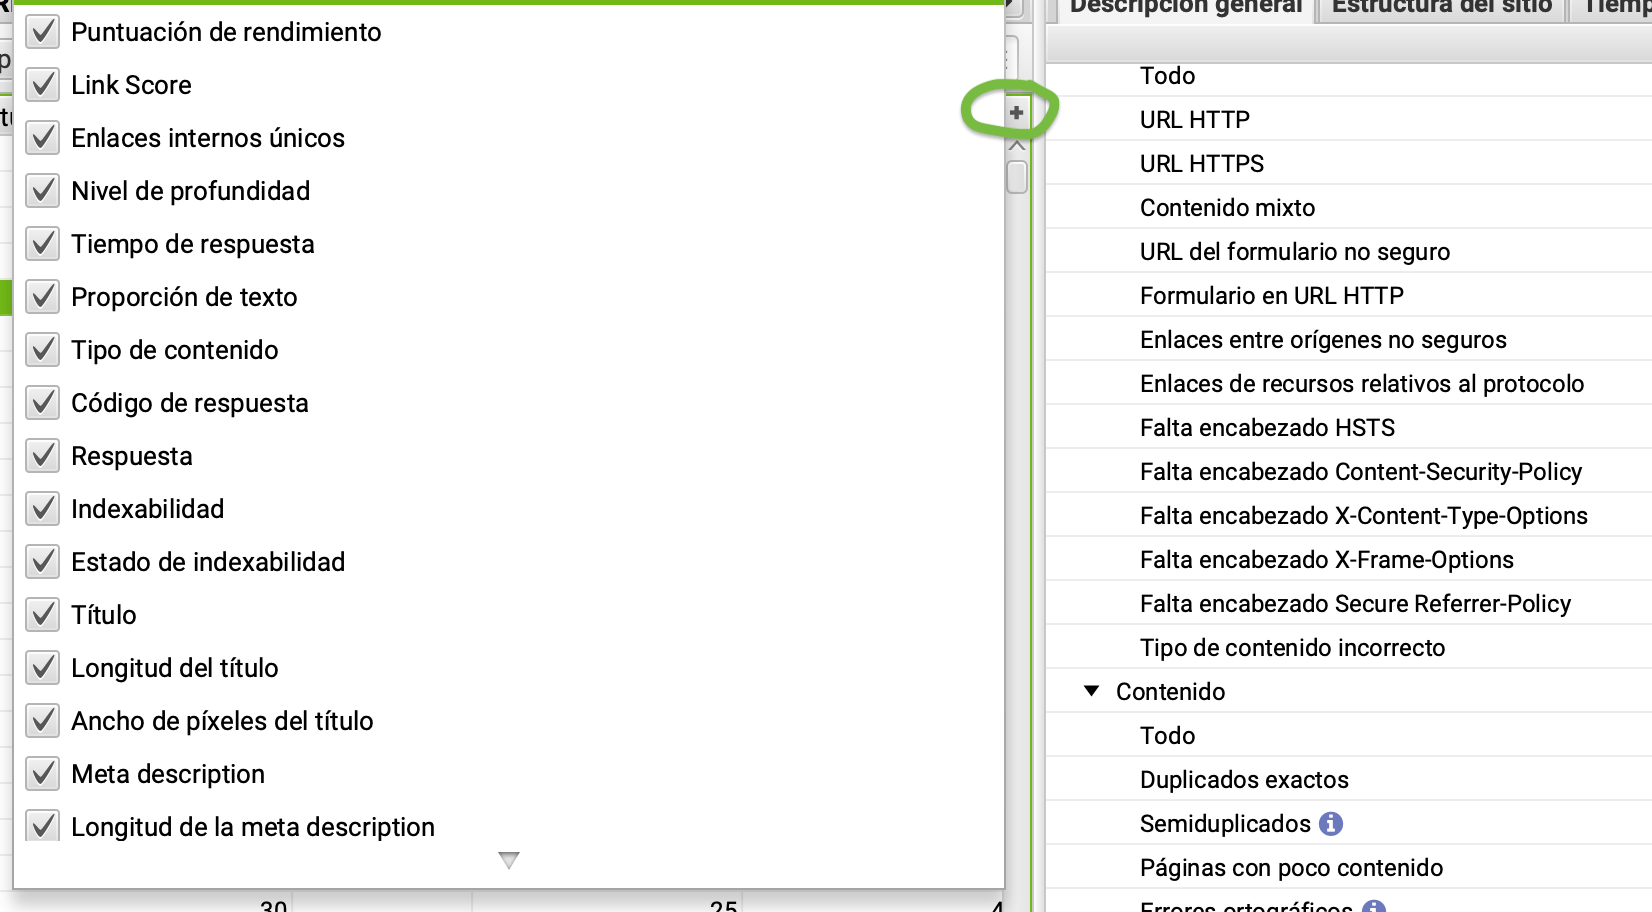 captura pantalla clic en + personalizar columnas